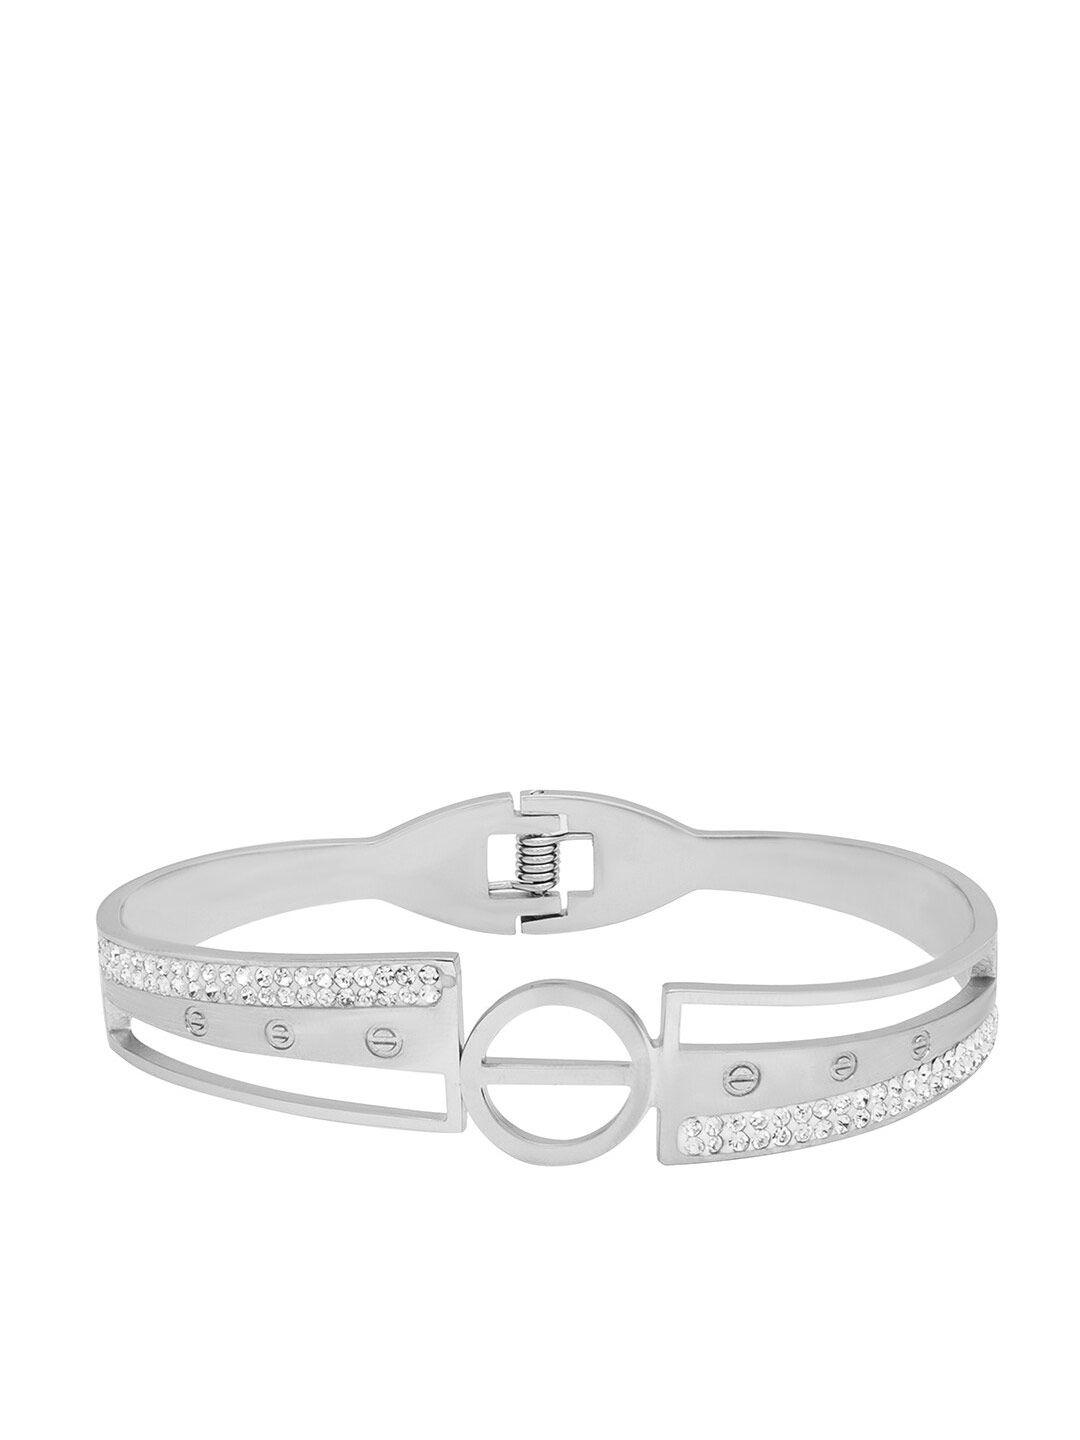 moon dust women silver-plated cubic zirconia bangle-style bracelet